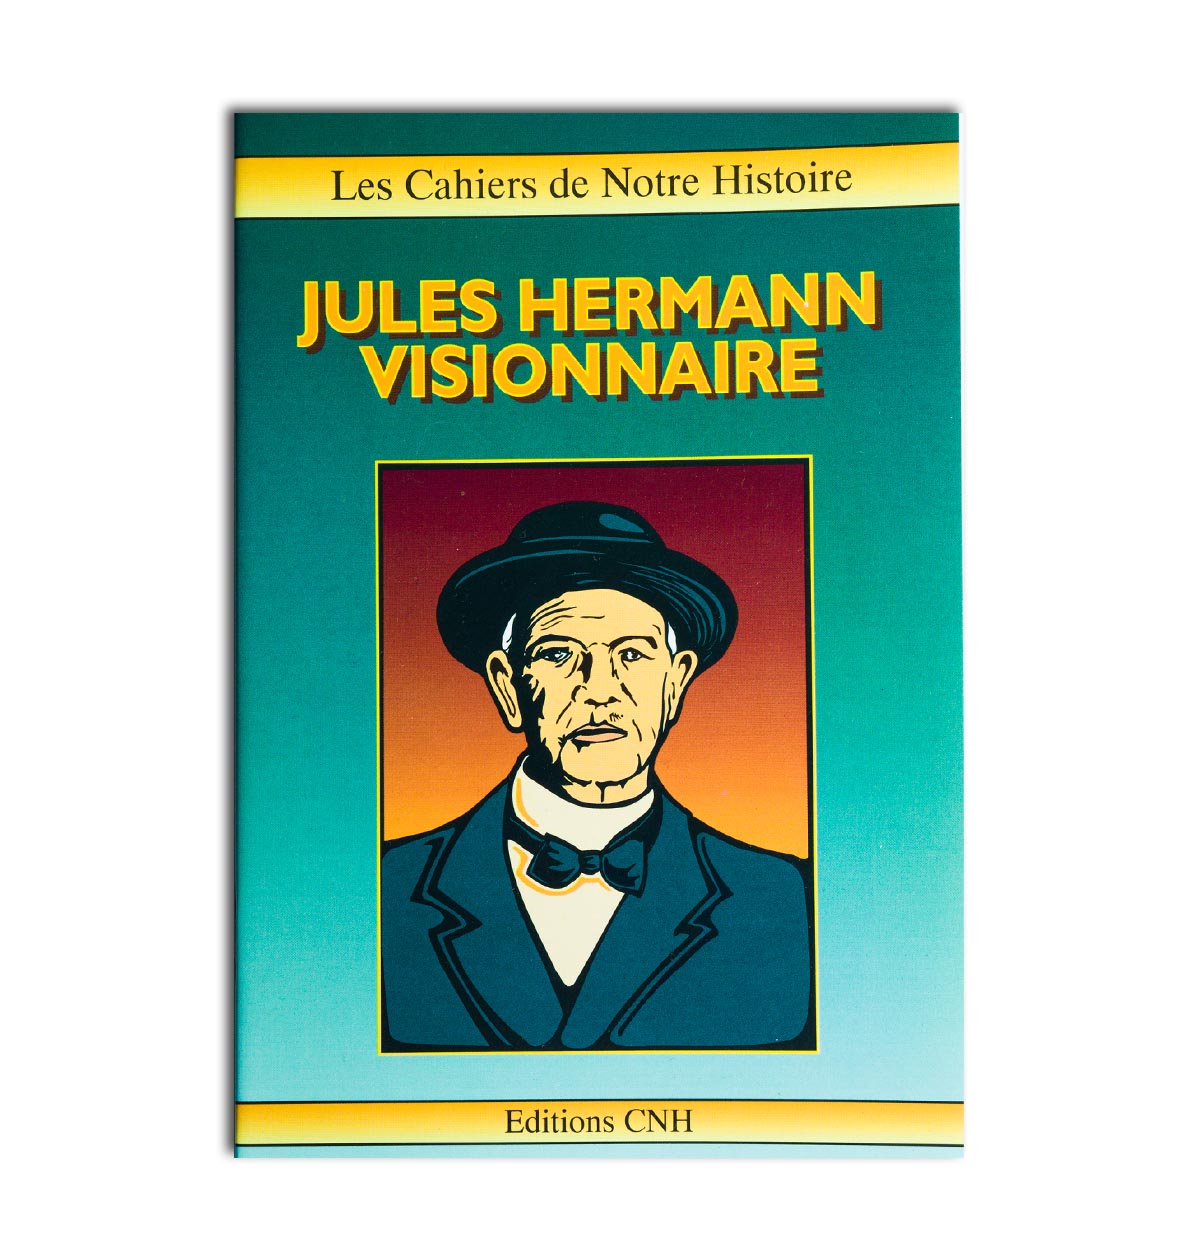 Jules Hermann visionnaire